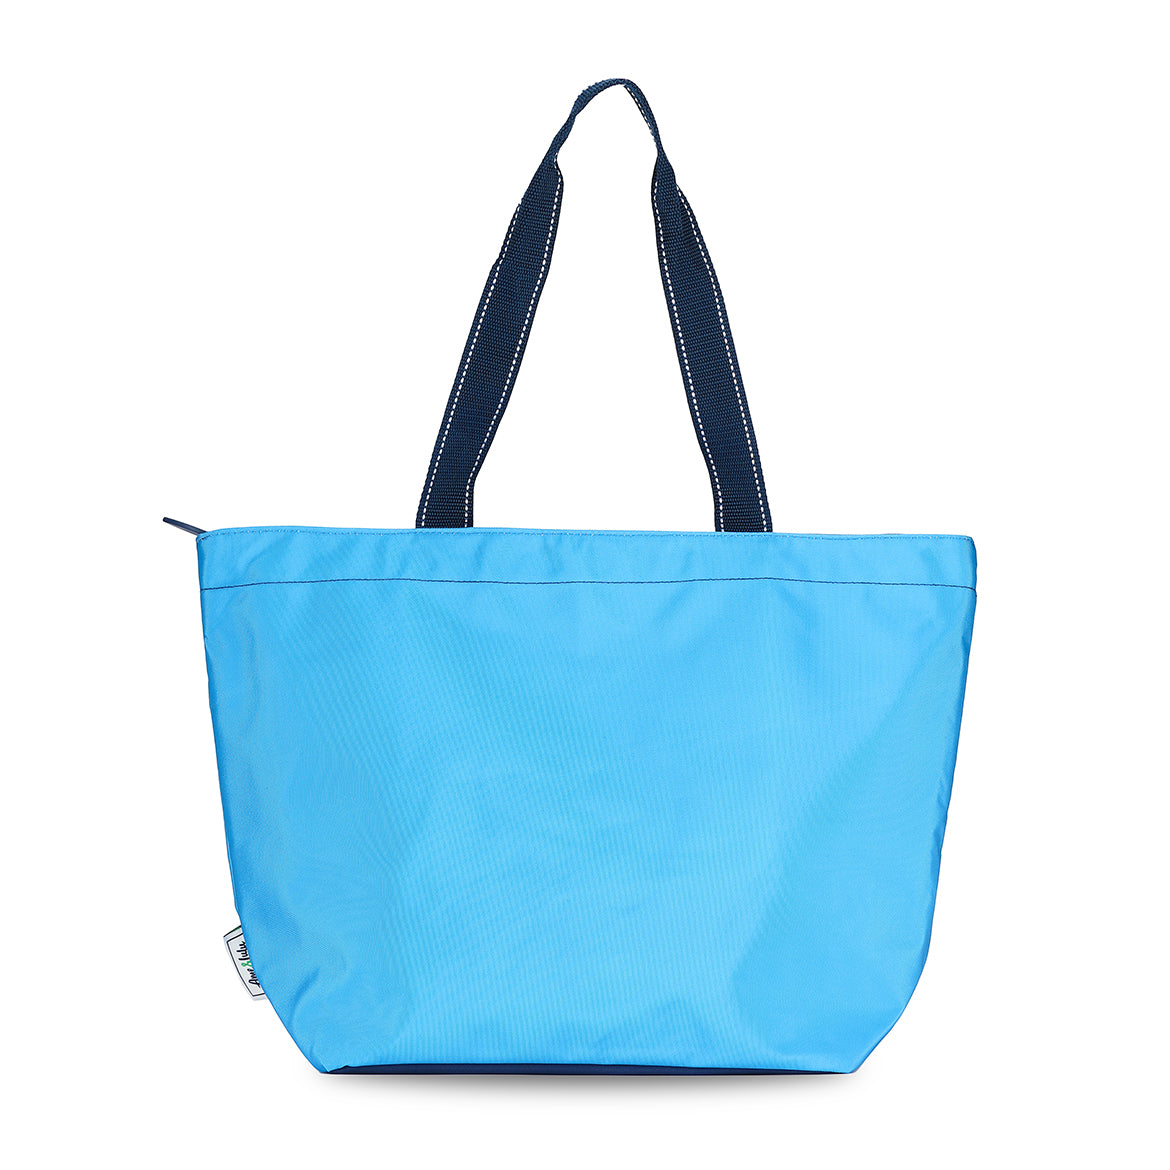 blue nylon tote bag with navy straps